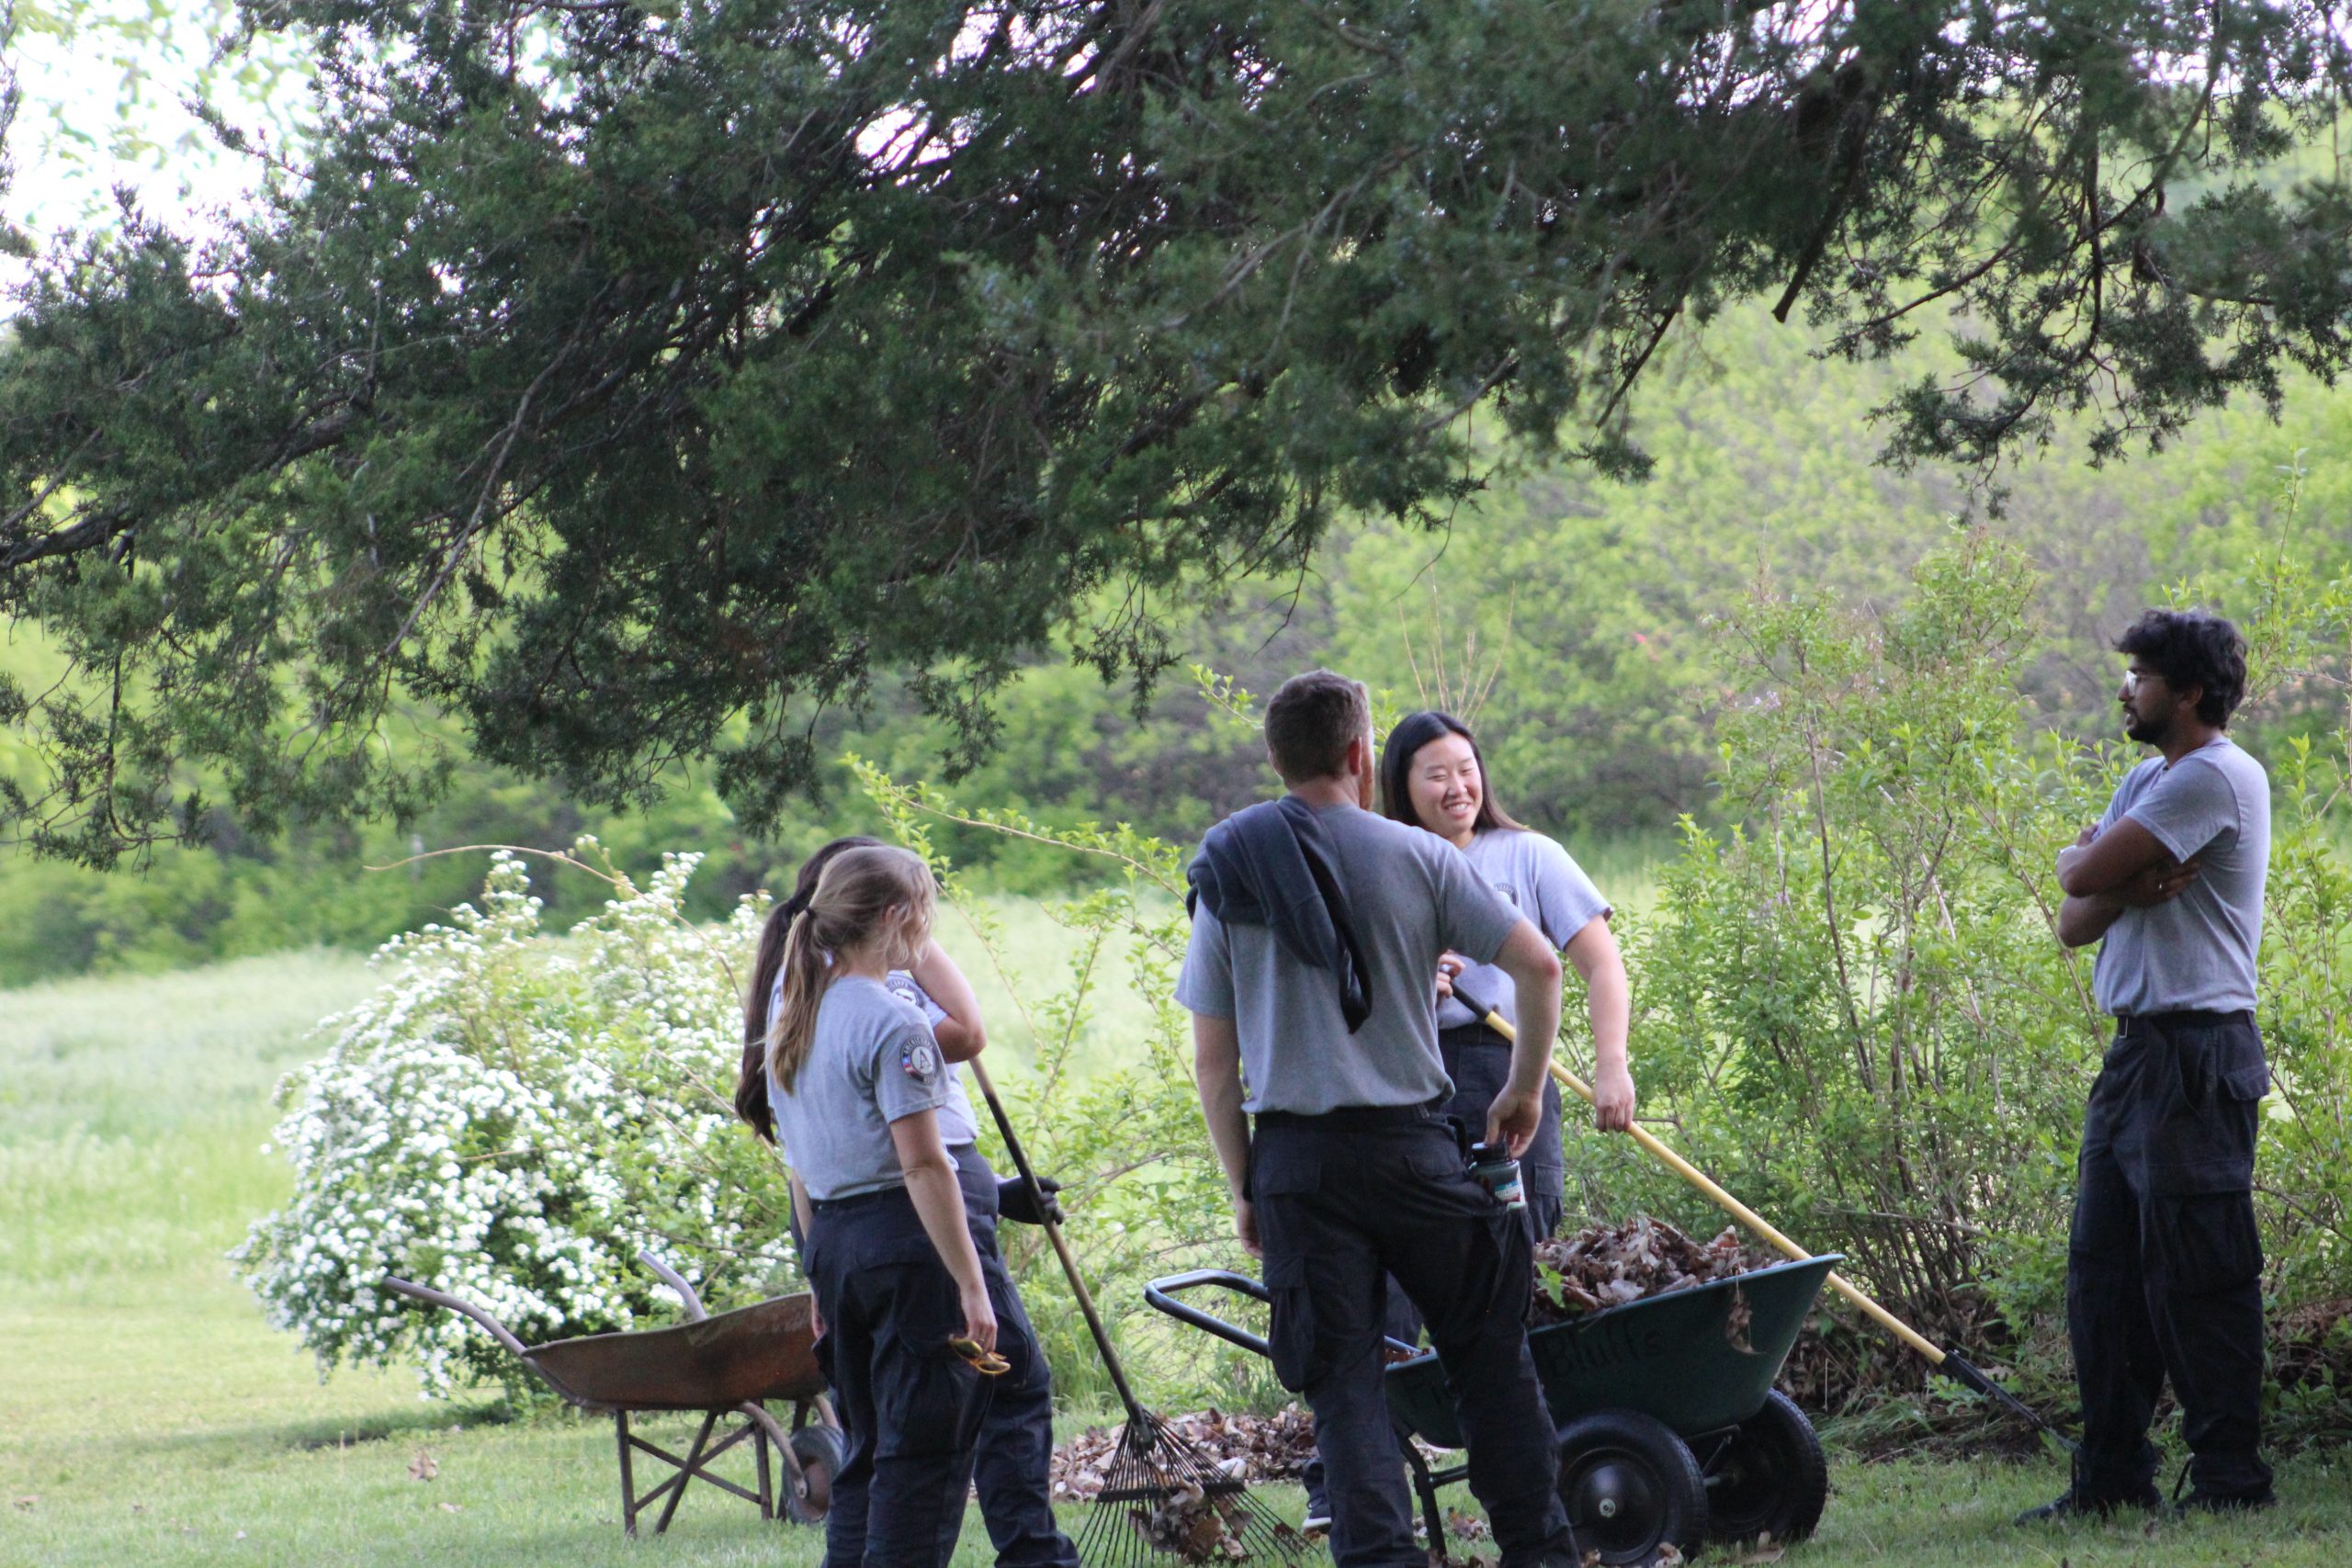 Volunteers vising outdoors during chores